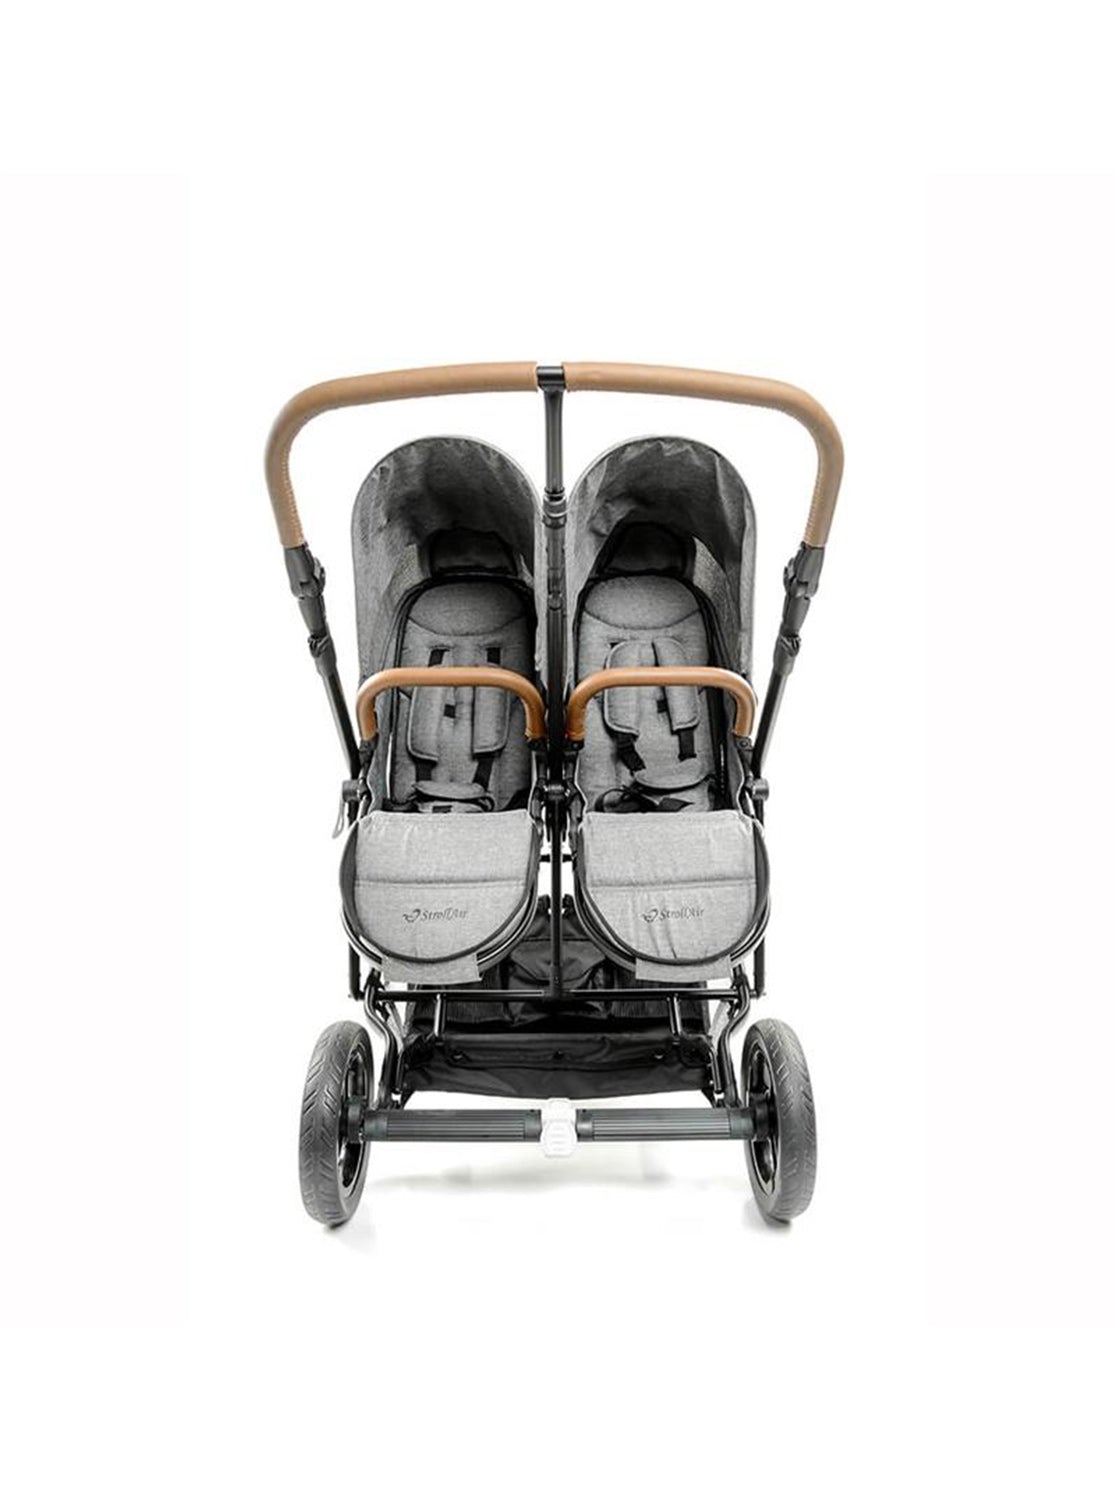 StrollAir Twin Way Twin Stroller/Double Stroller - Denim Slate - ANB Baby -$500 - $1000